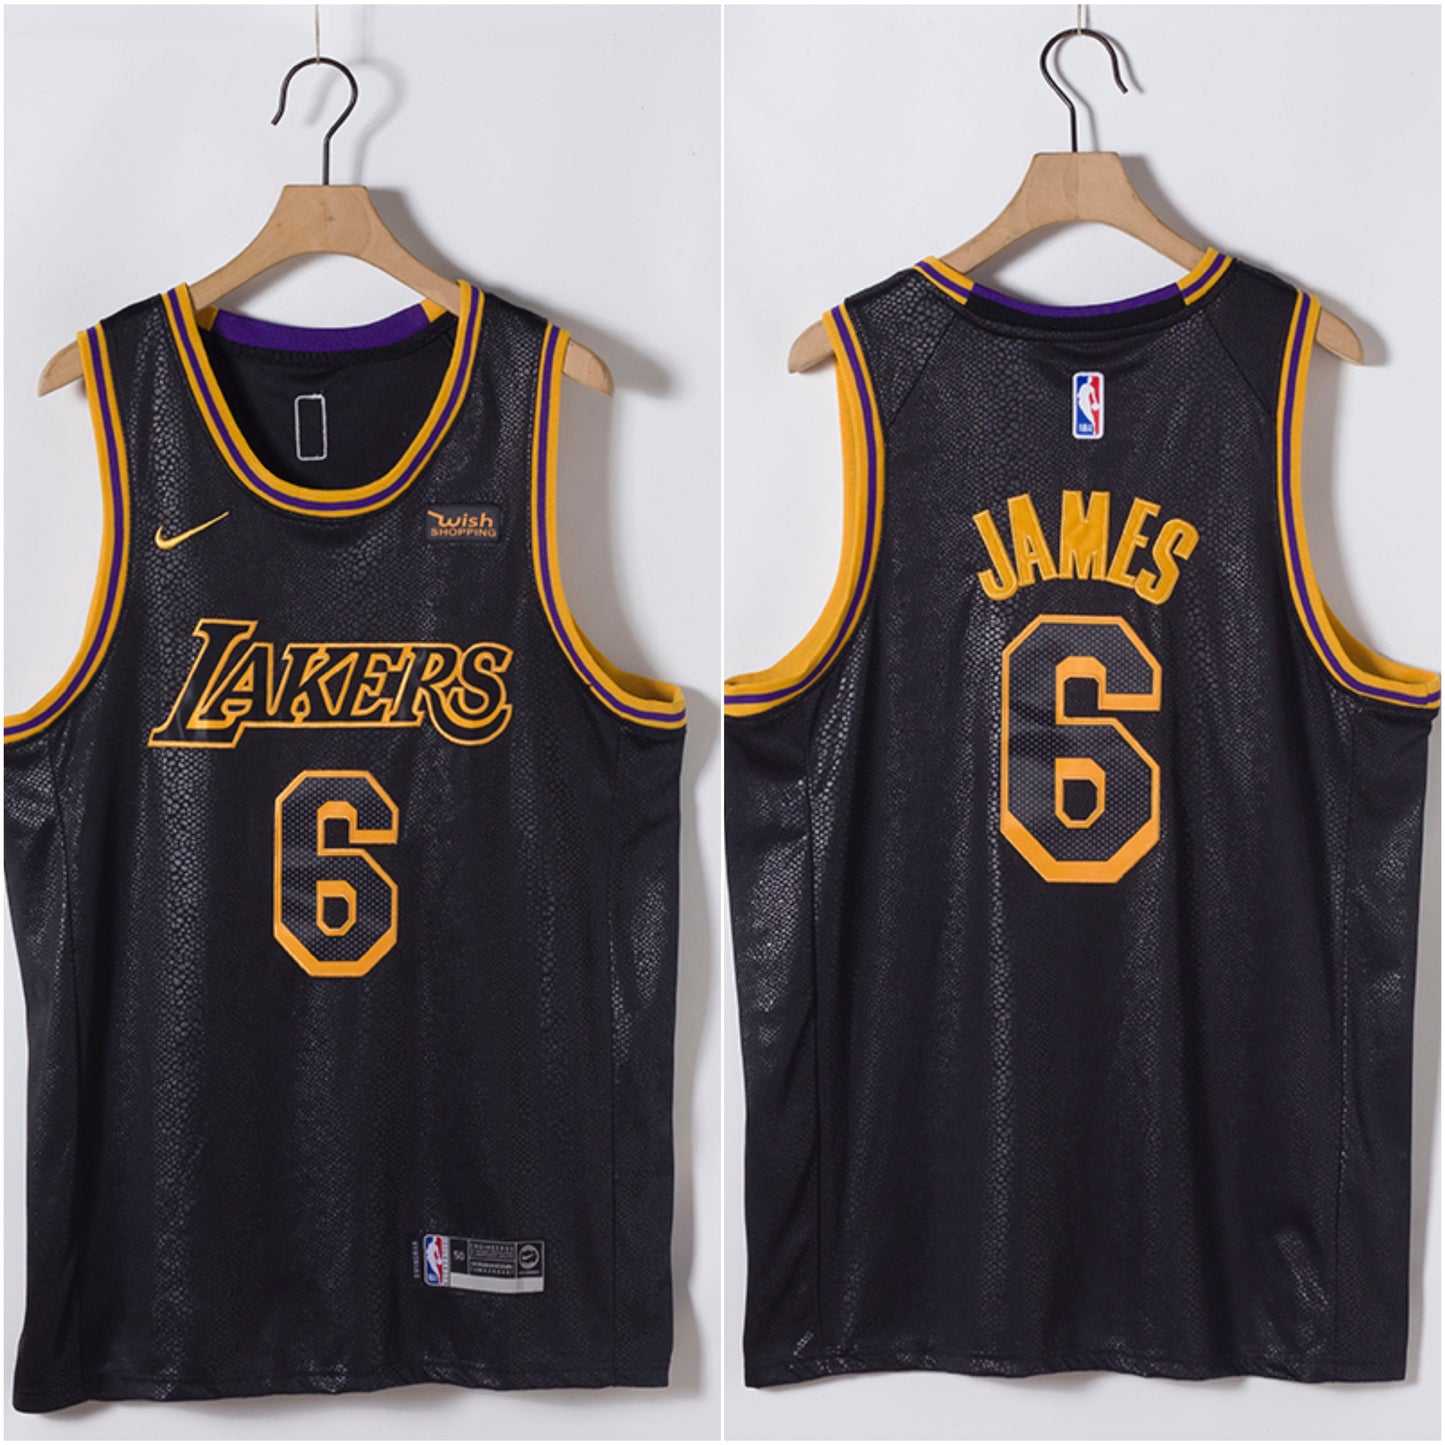 JAMES 6 Black Jersey Los Angeles Lakers NBA Jersey